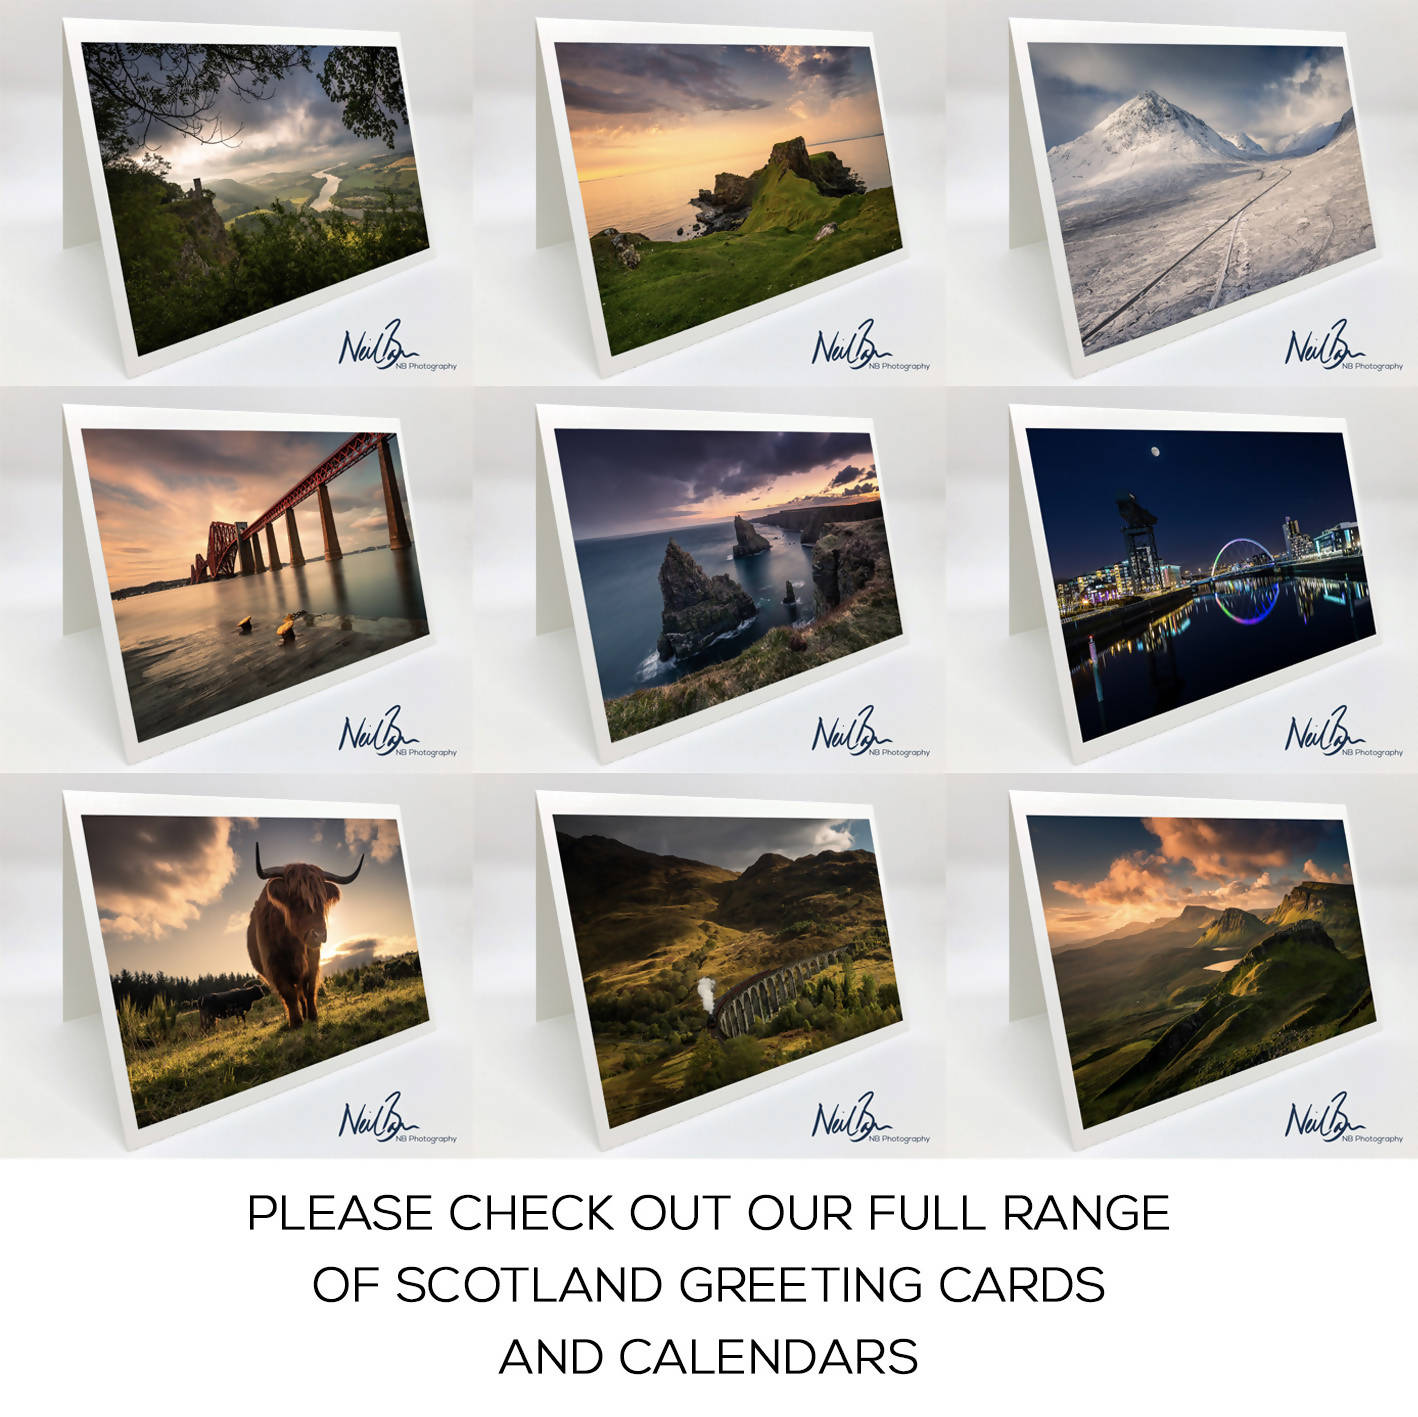 Perth & River Tay - Scotland Greeting Card - Blank Inside